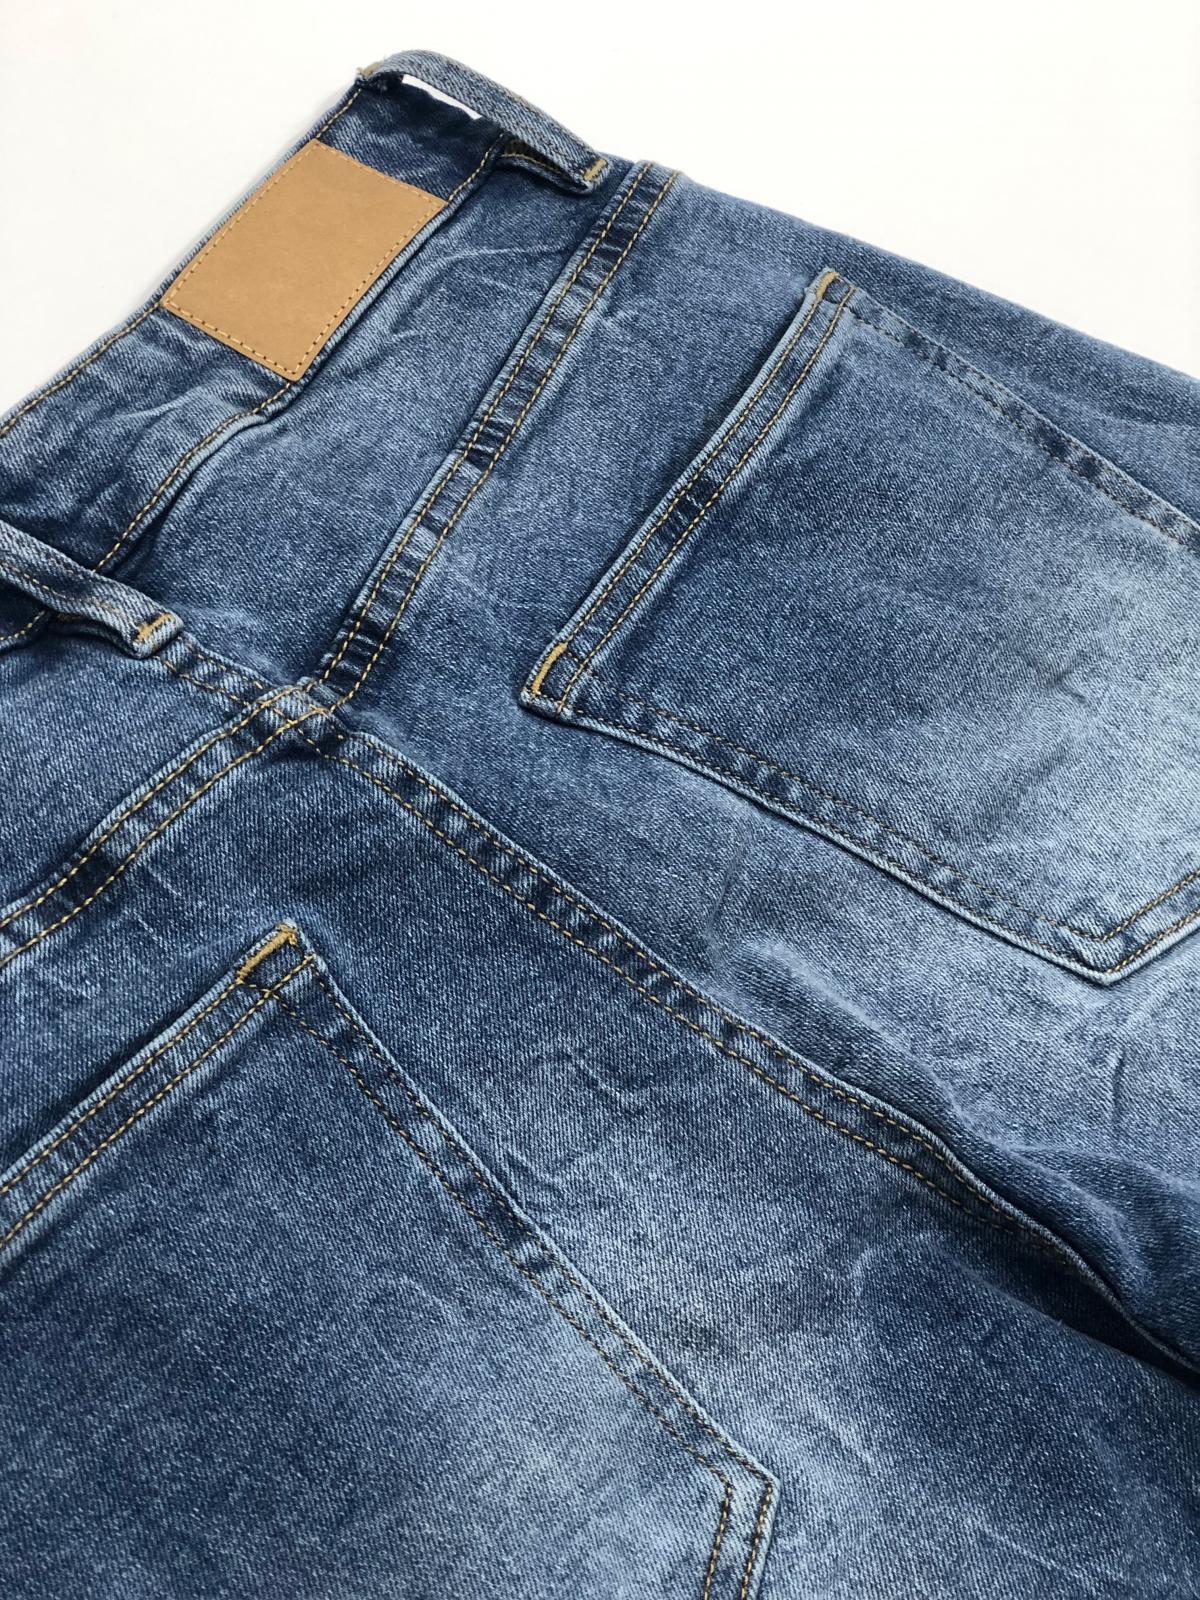 Men's Jeans Shorts SS0003 #2